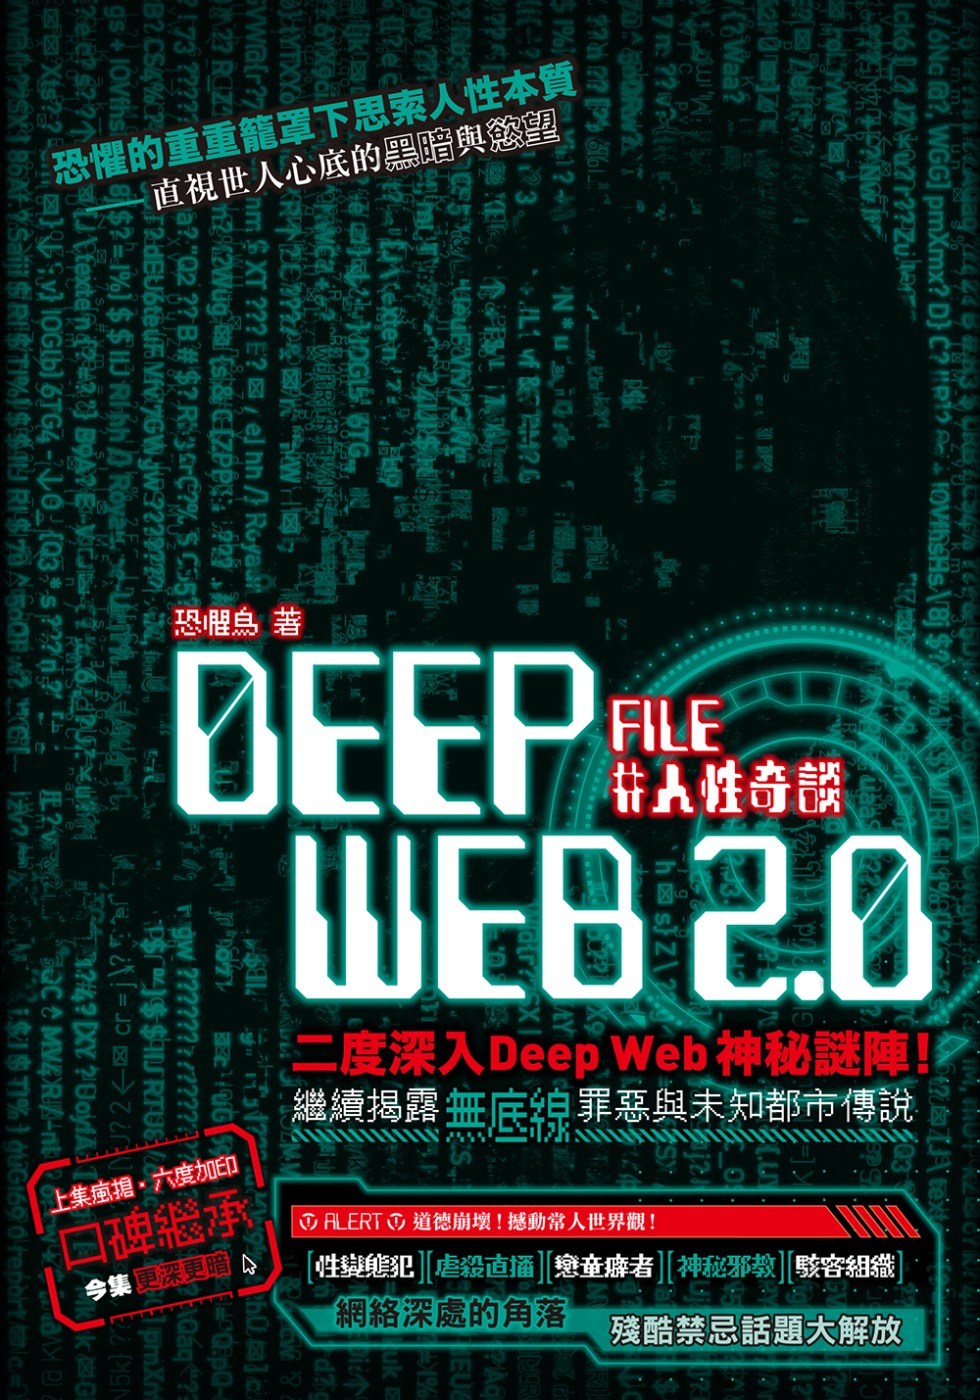 Deep Web 2.0 File #人性奇談